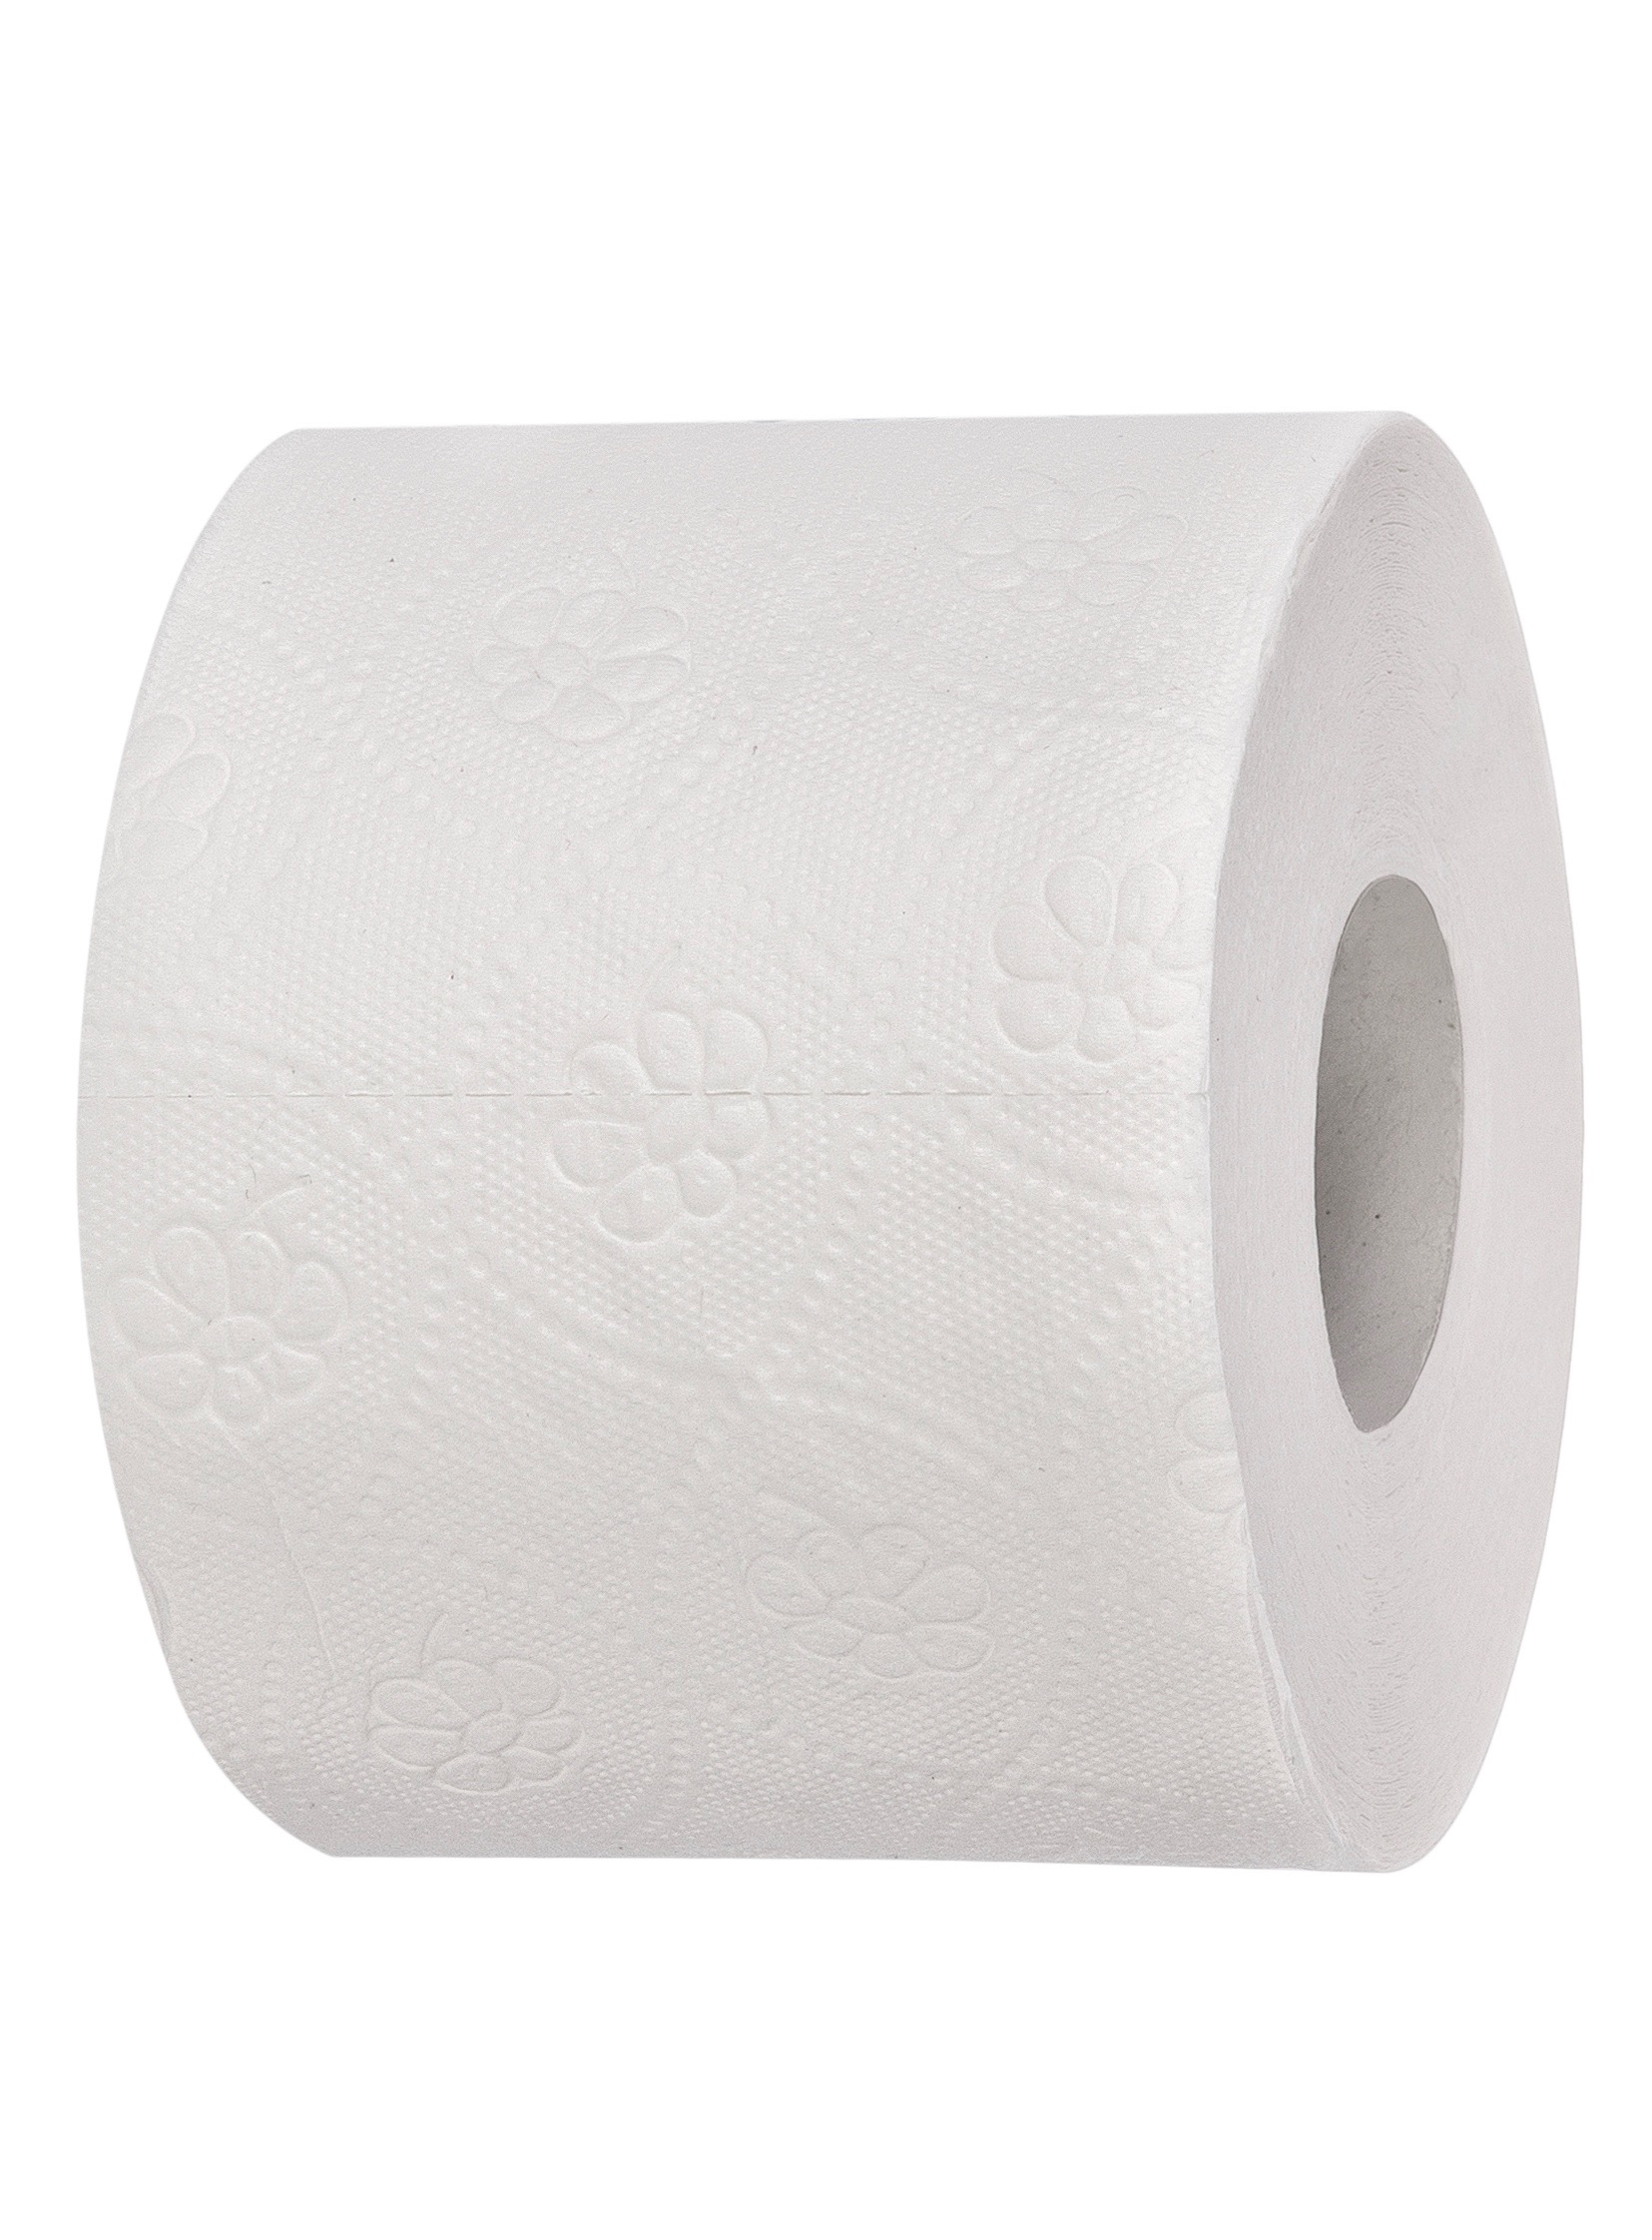 Toilettenpapier Kleinrolle 3-lagig, 250 Blatt - Zellulose